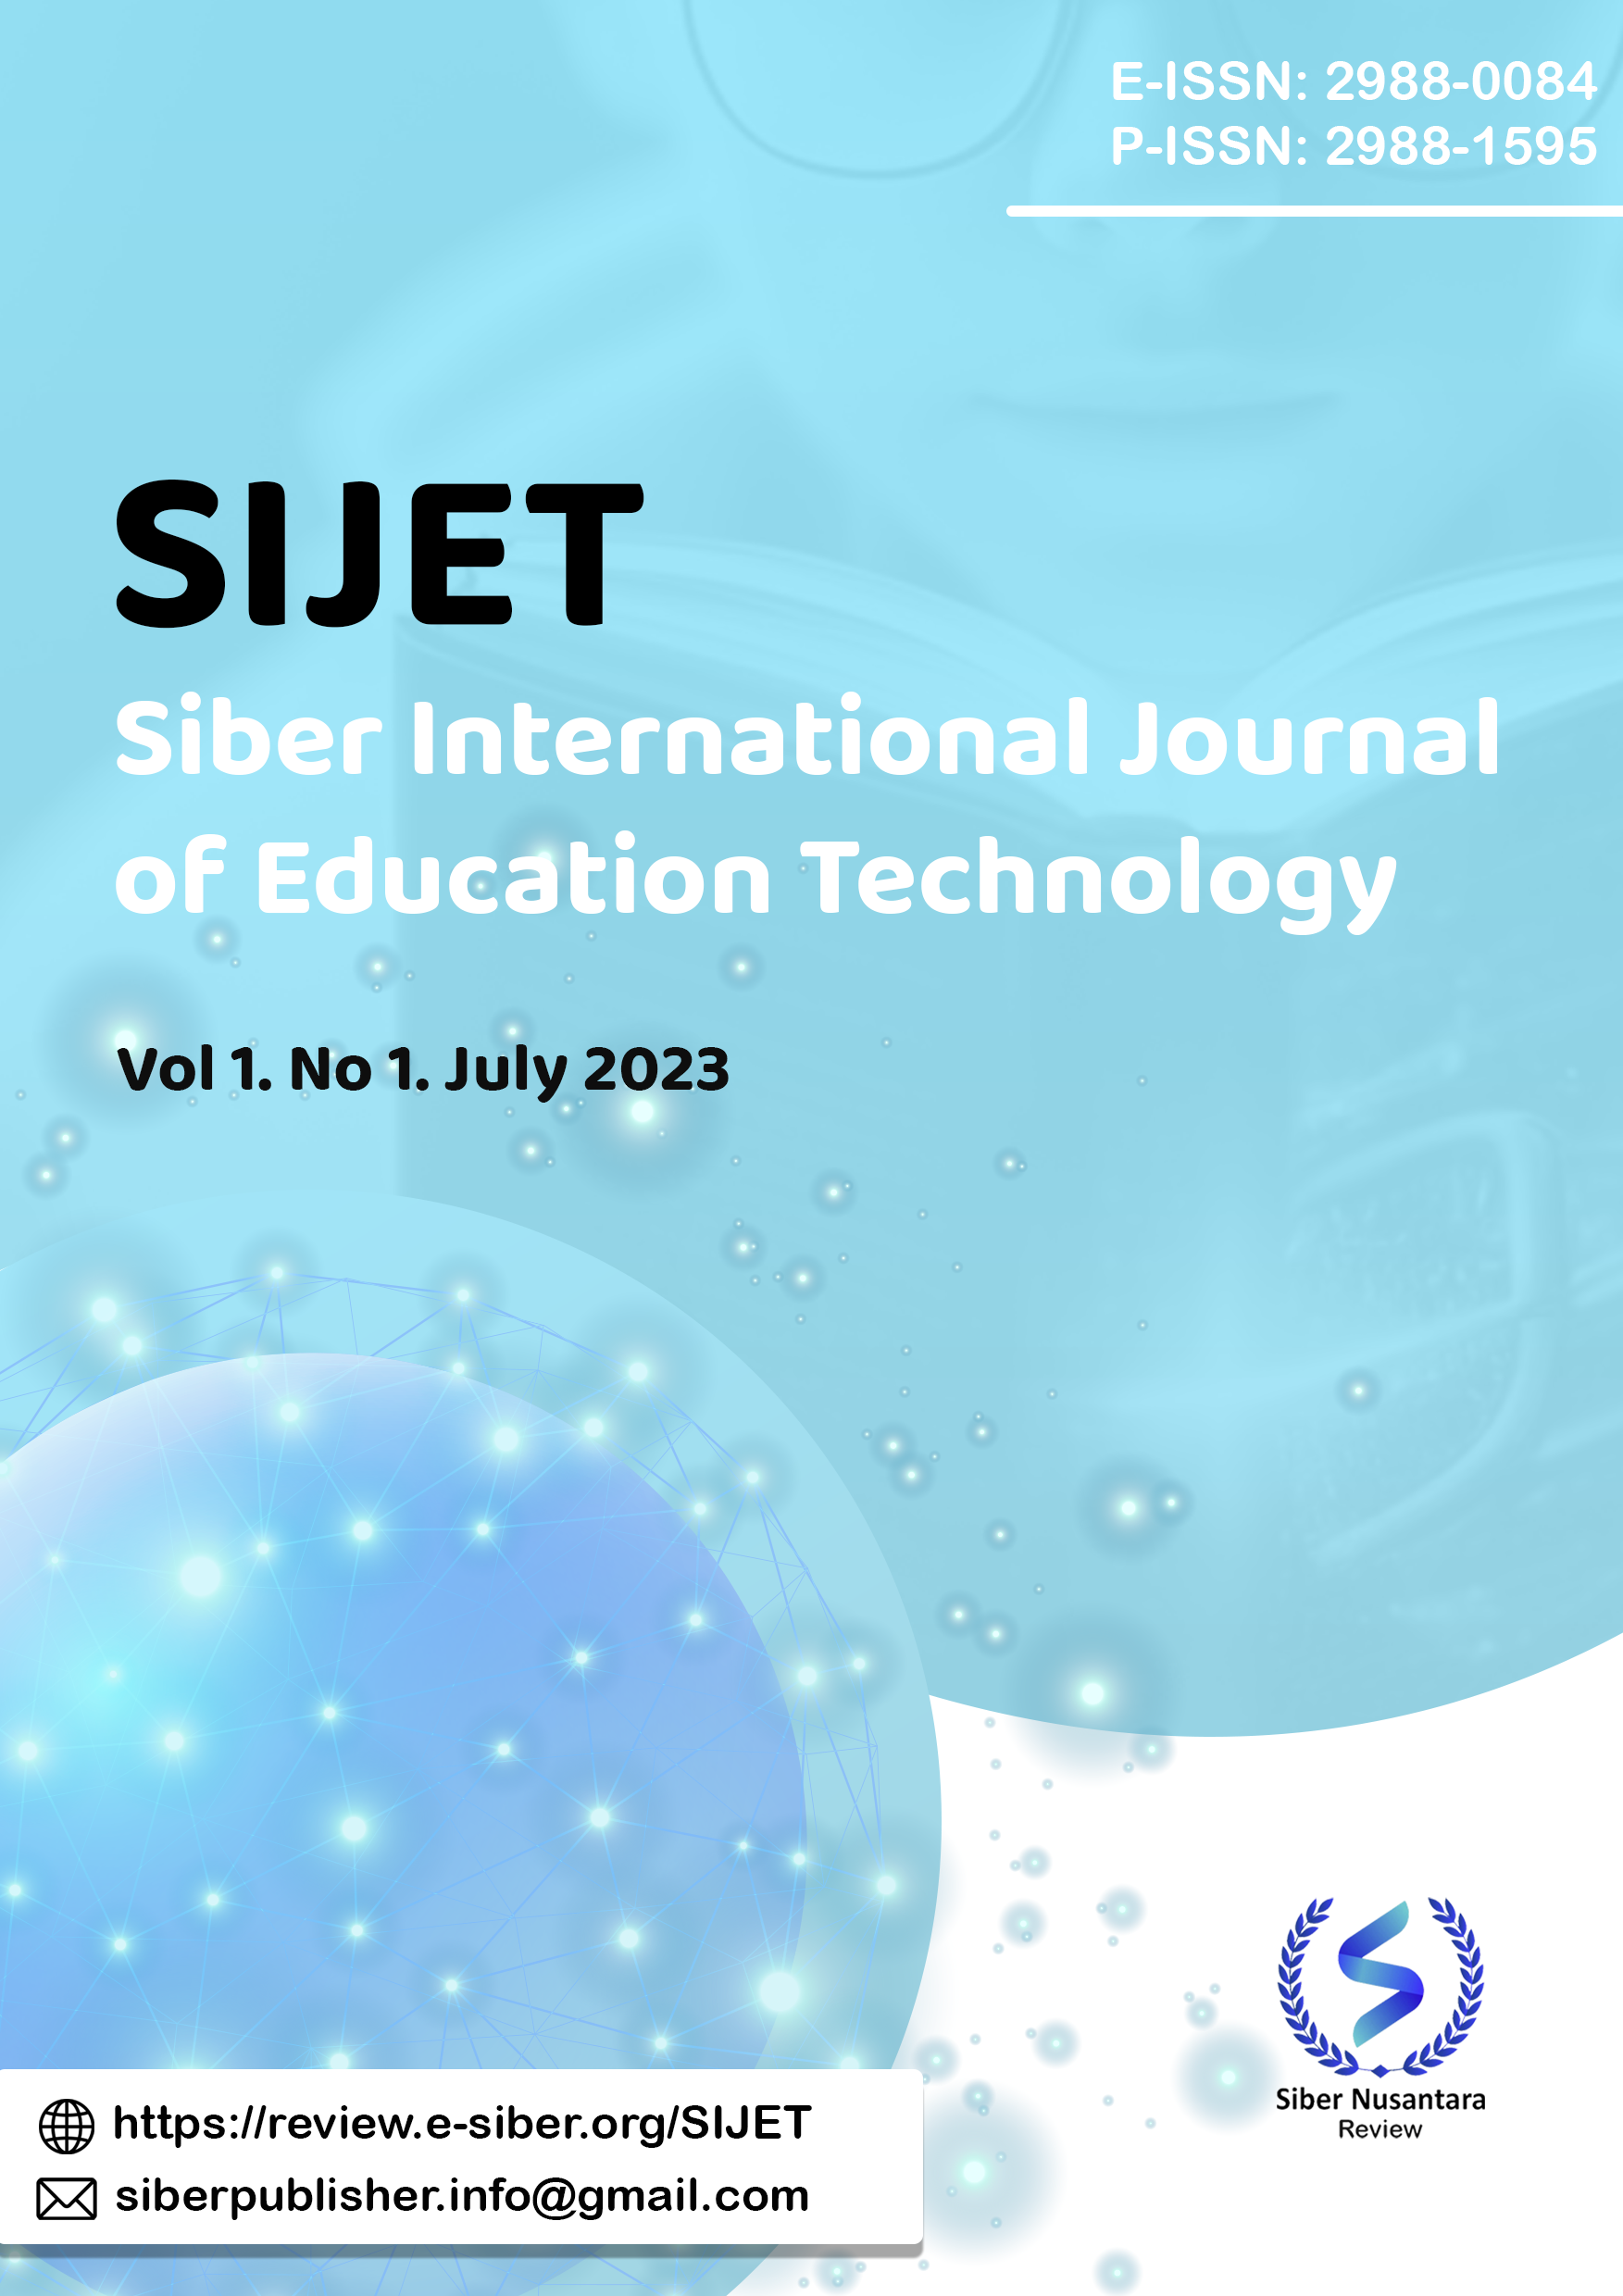 					View Vol. 1 No. 1 (2023): (SIJET) Siber International Journal of Education Technology (July 2023)
				